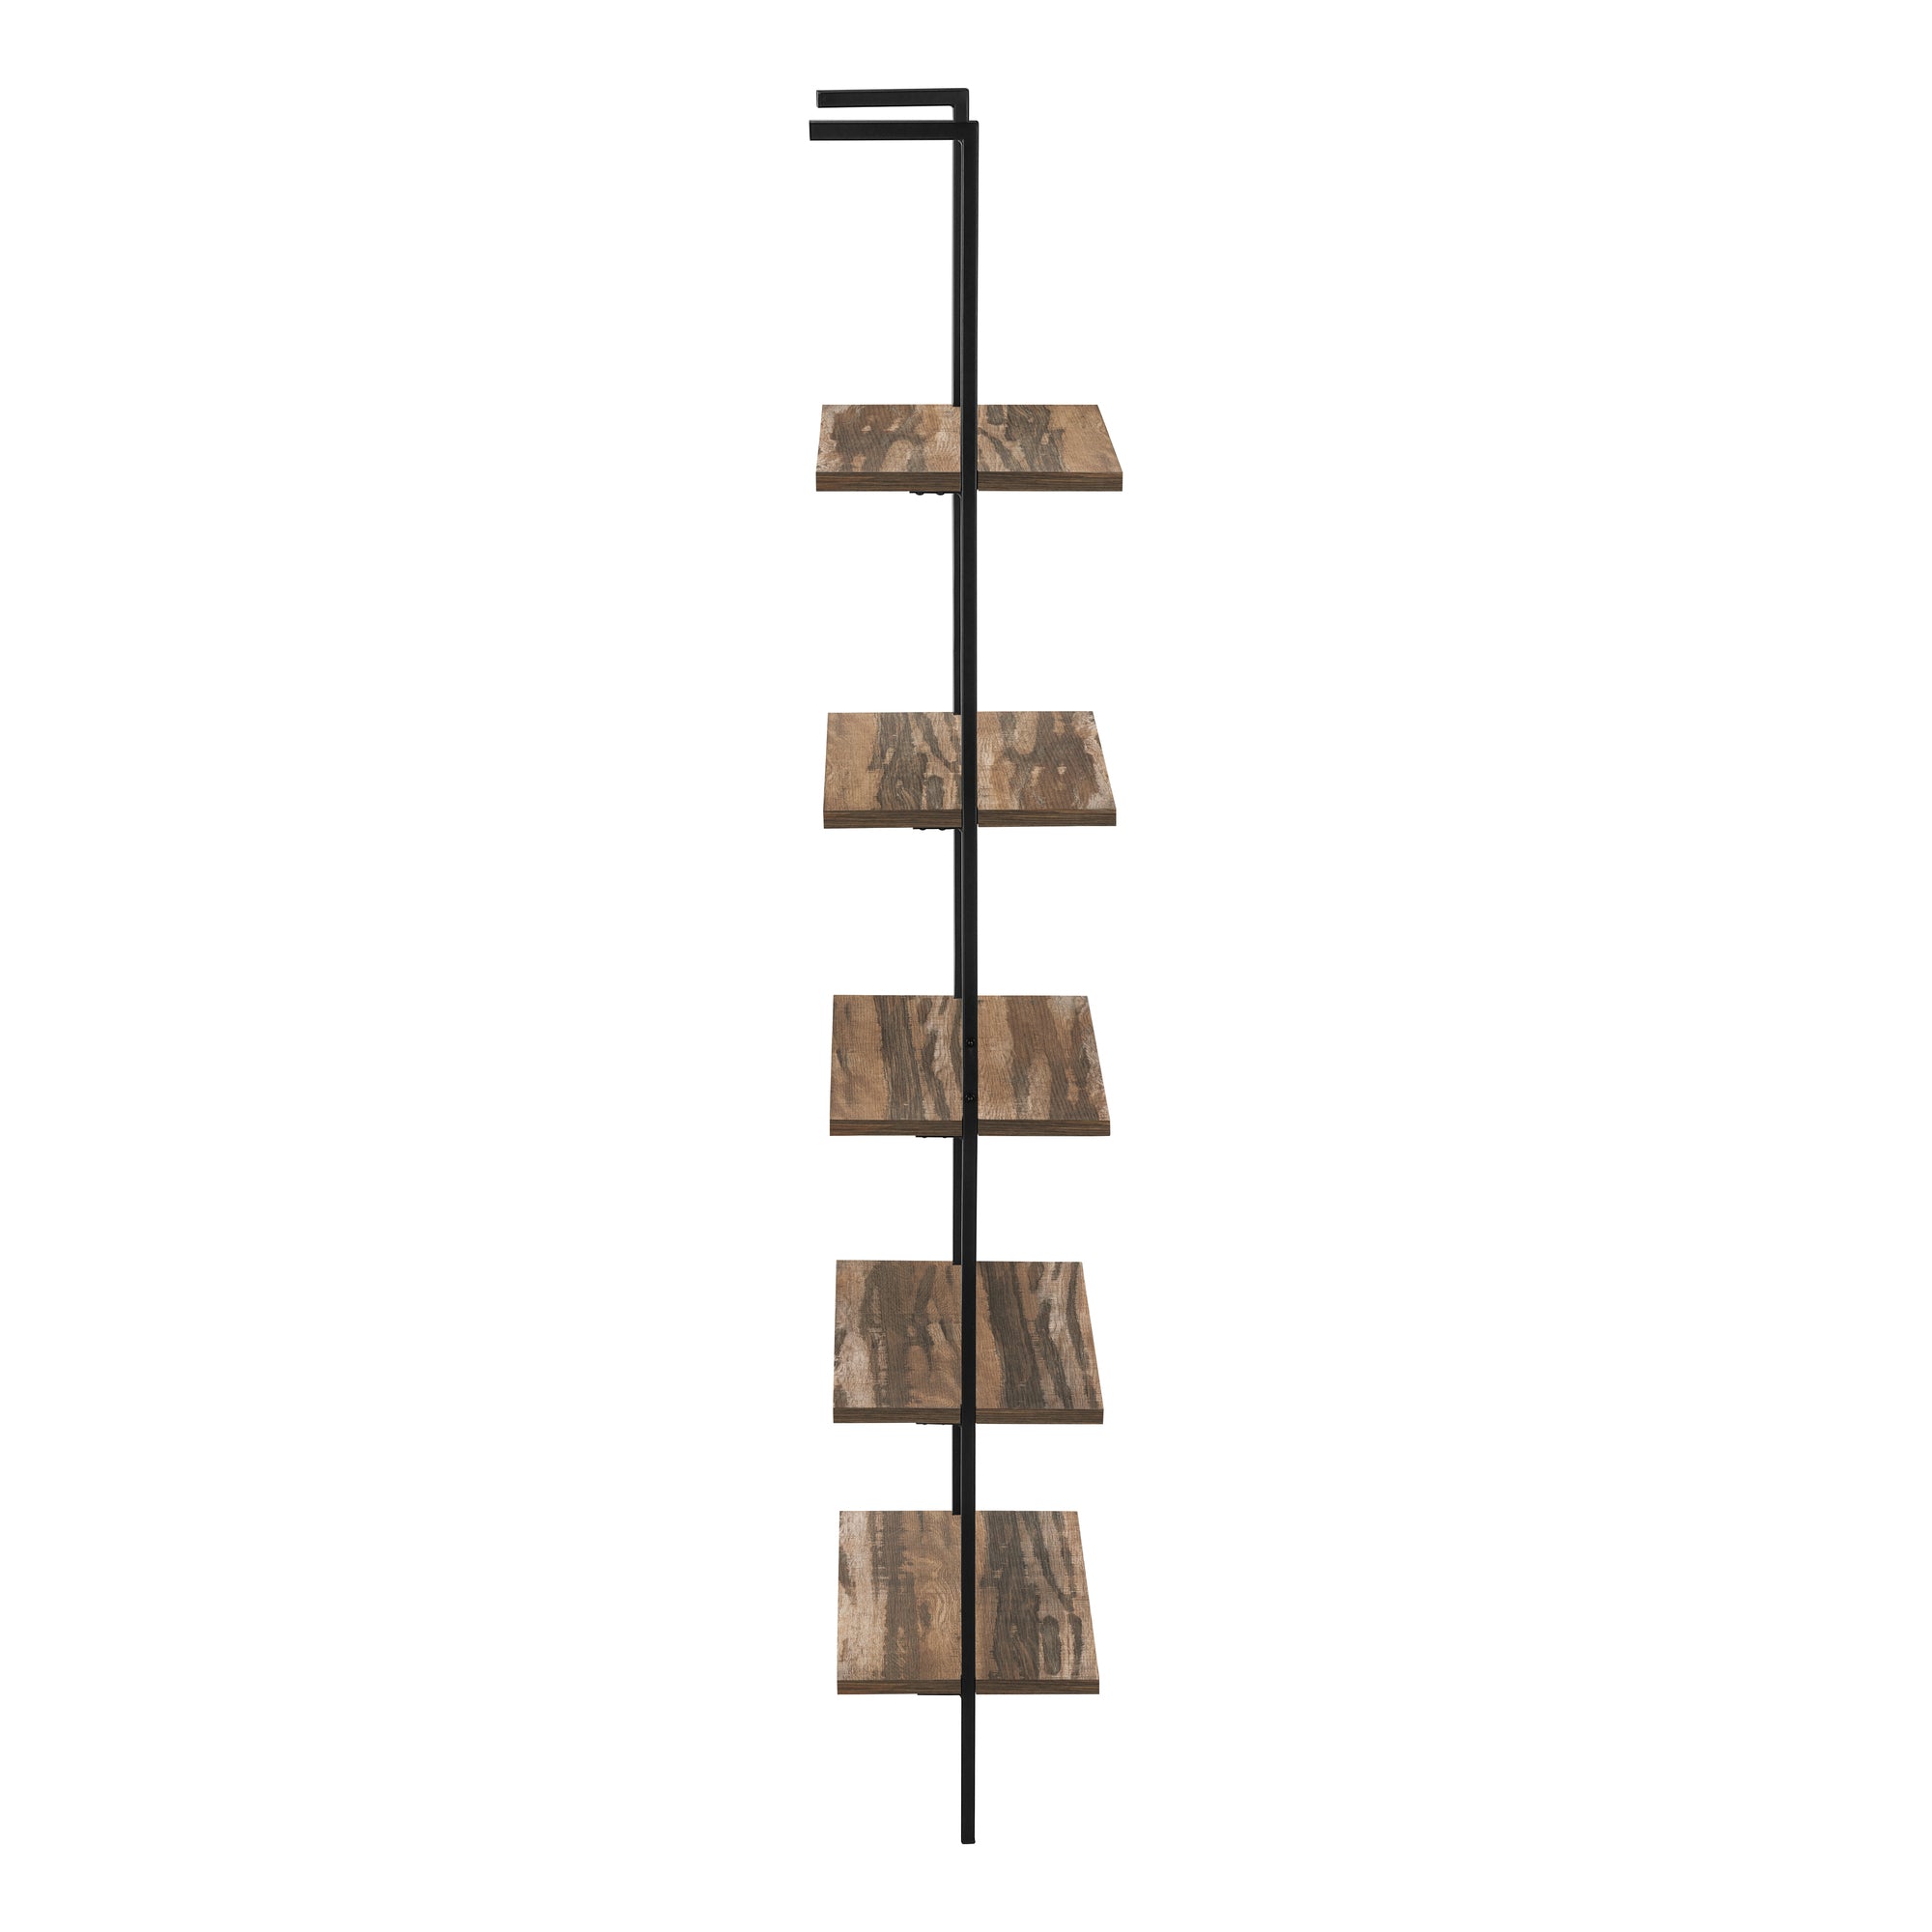 MN-243680    Bookcase - 5 Tier Etagere Ladder Bookshelf - Metal Frame - 72"H - Medium Brown Reclaimed Wood-Look